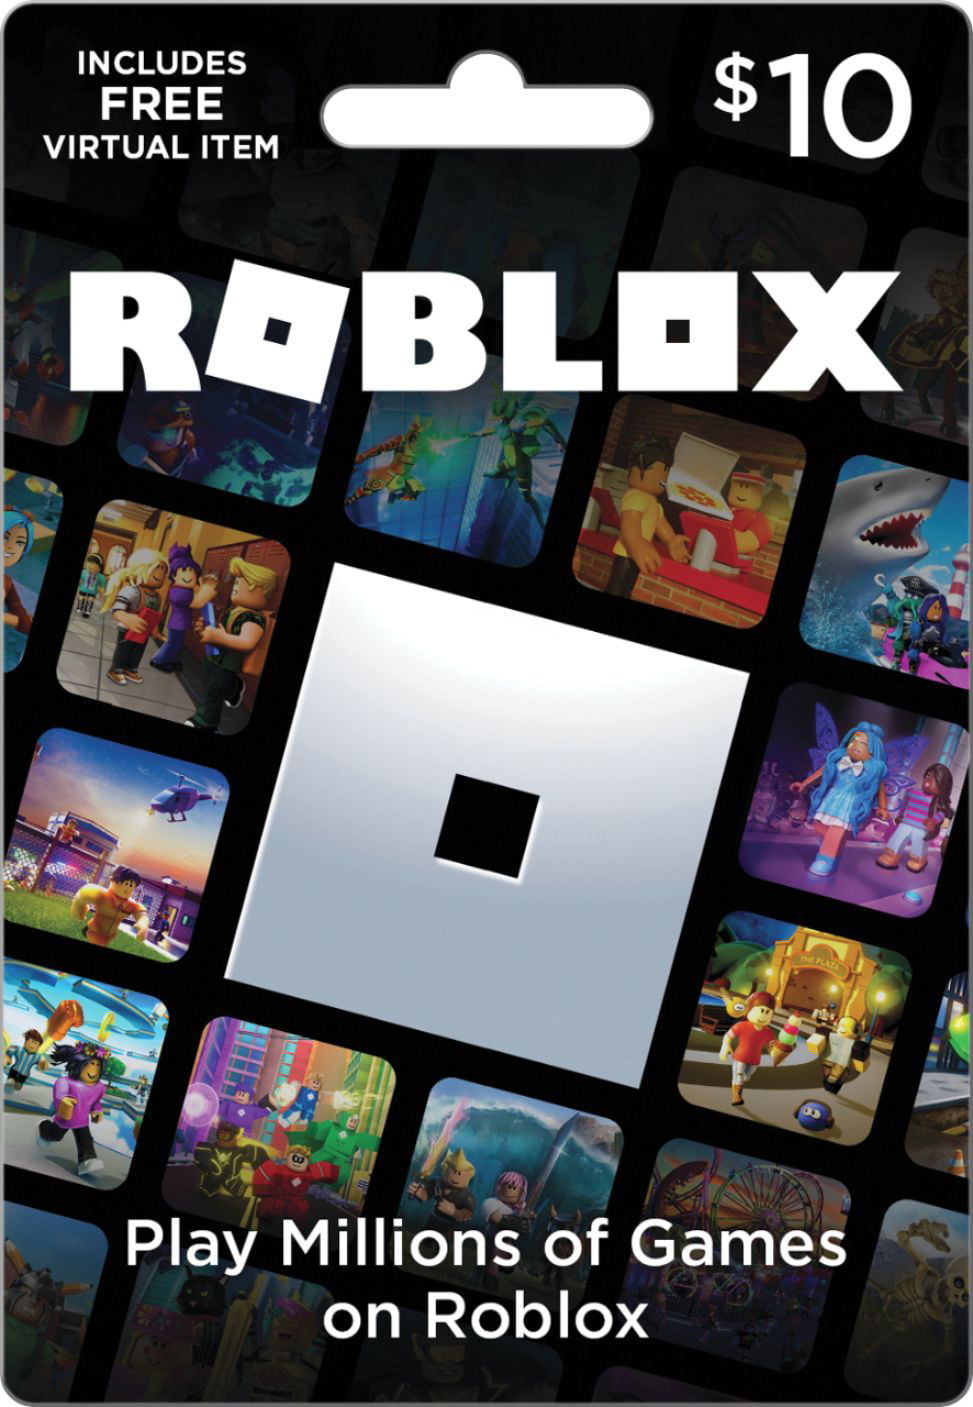 Roblox 10 Digital Gift Card Includes Exclusive Virtual Item Digital Download Walmart Com Walmart Com - roblox gift card walmart 10